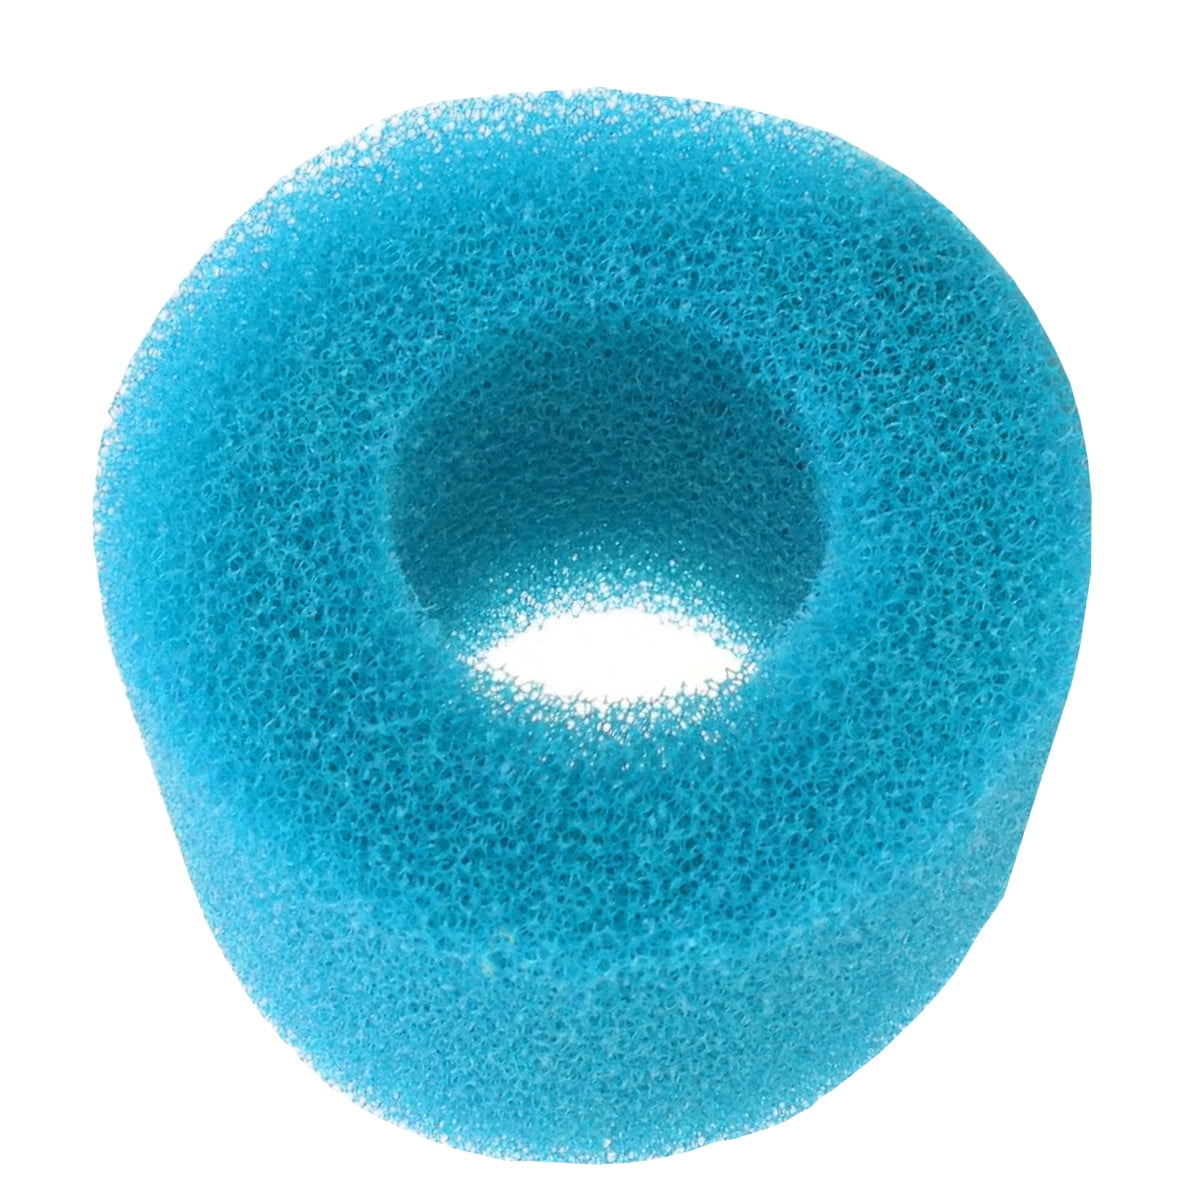 Reusable Washable Swimming Pool Filter Foam Sponge Cartridge1 For Intex Type UK 